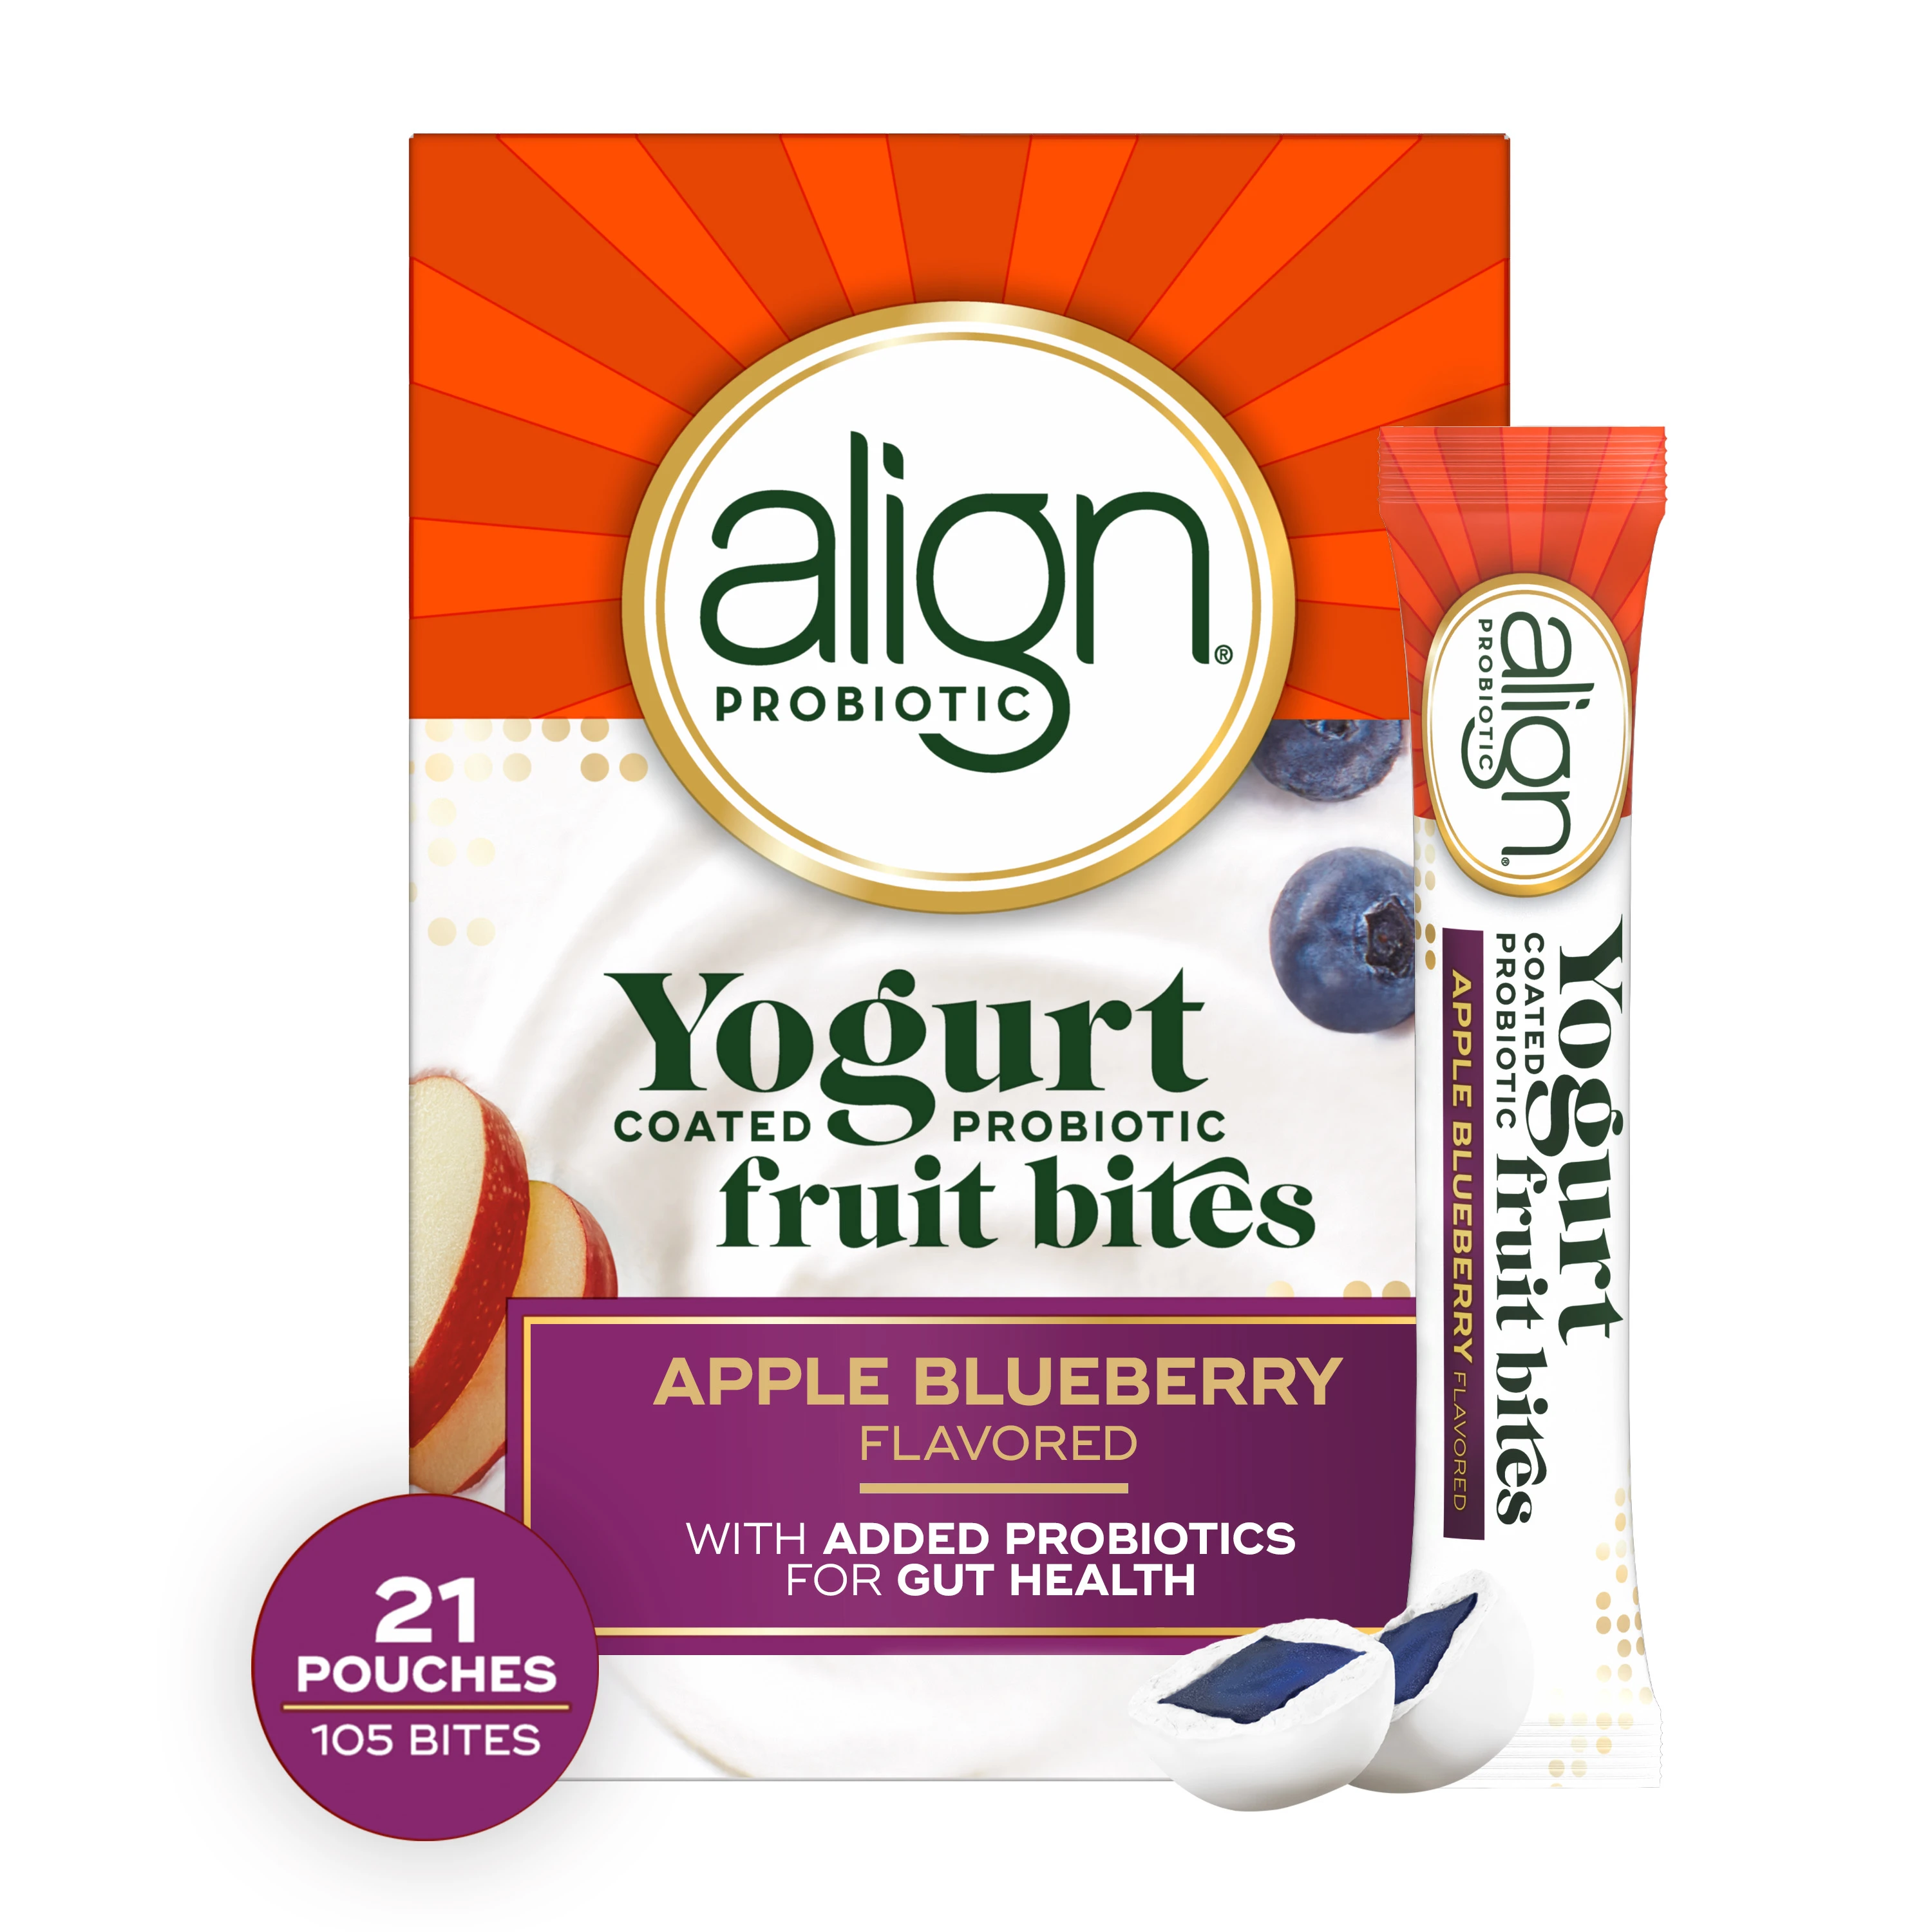 Align Yogurt Coated Probiotic Fruit Bites